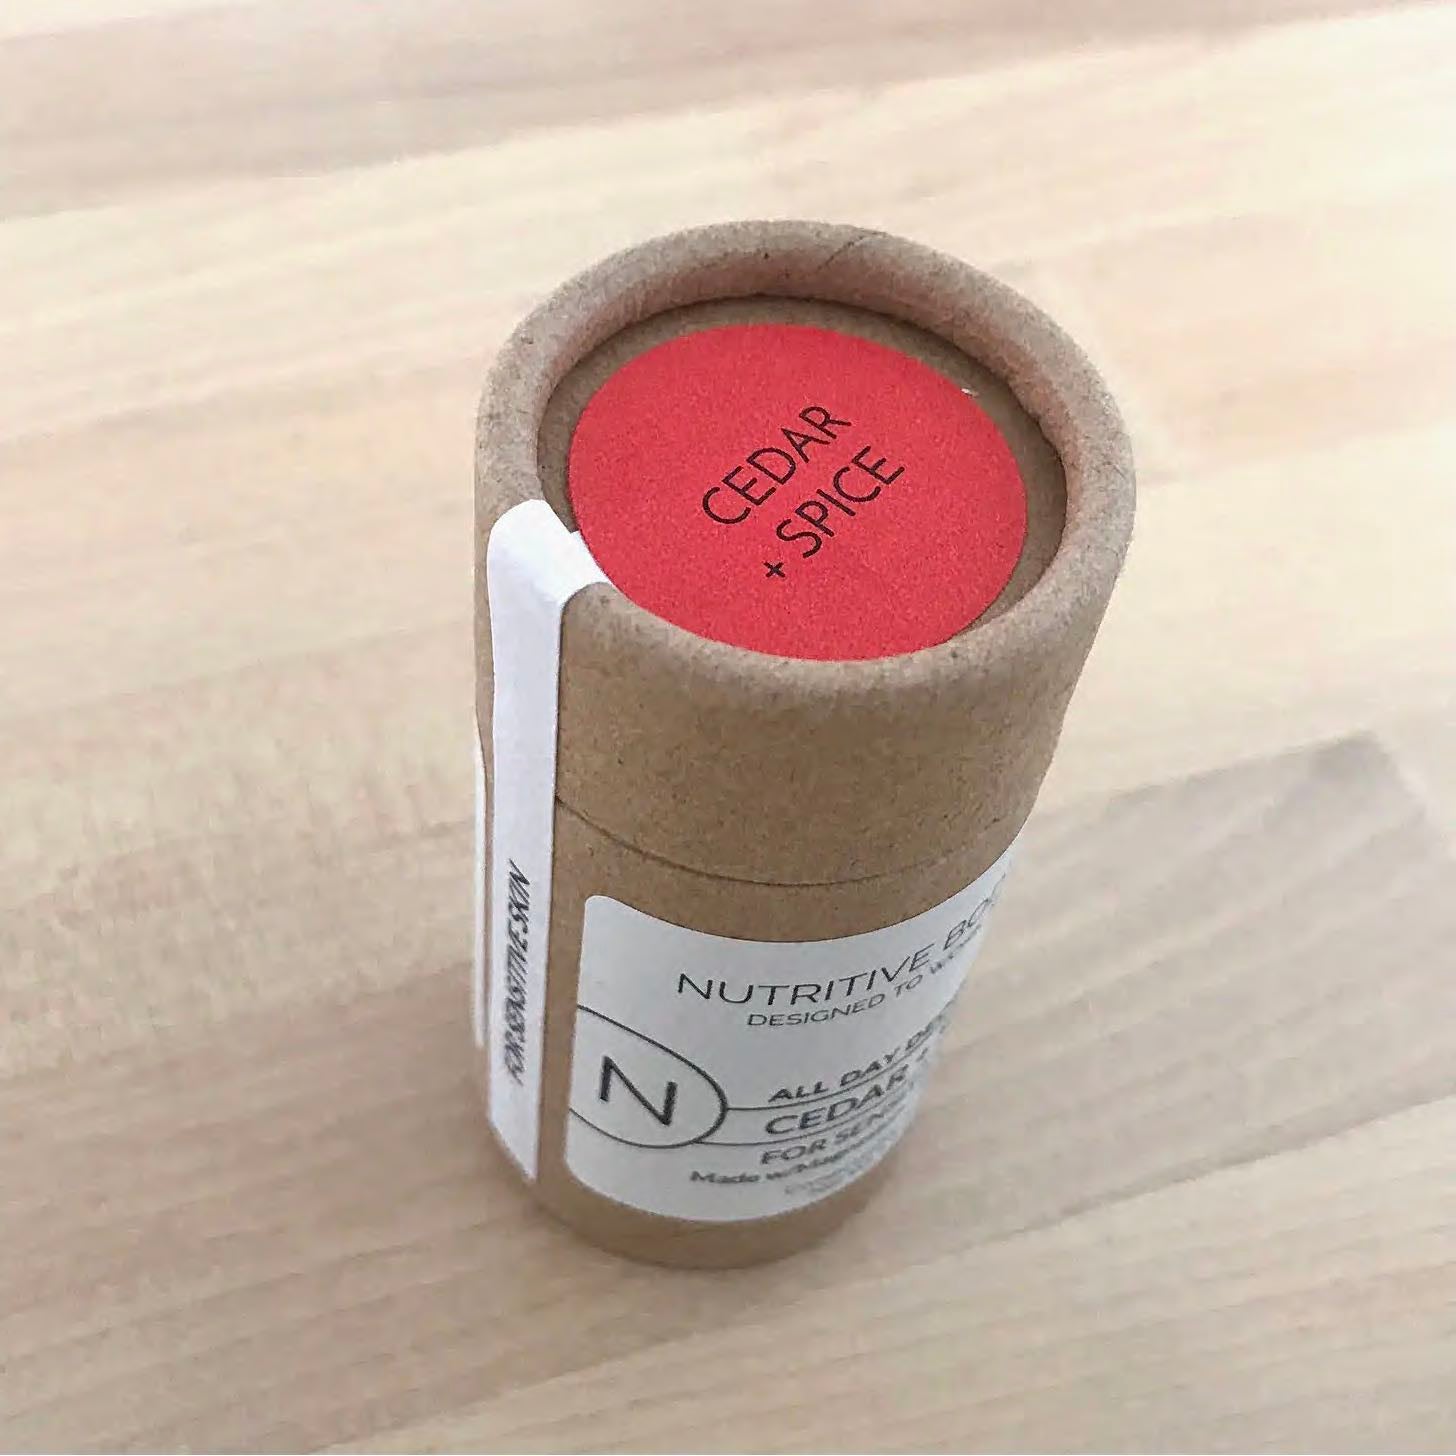 Cedar & Spice Scent - Sensitive Skin Deodorant, Compostable Tube